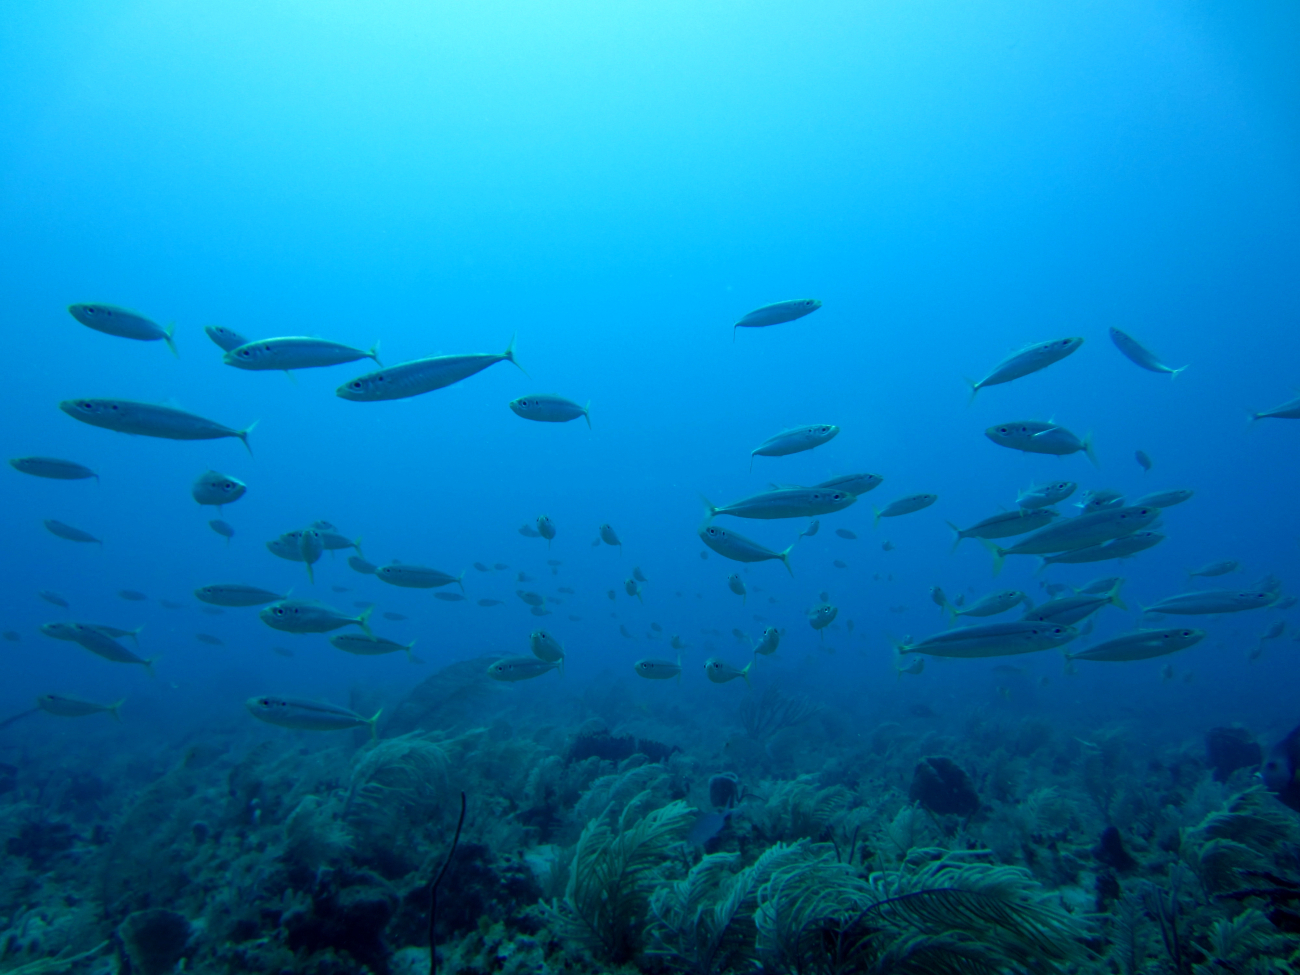 A school of mackerel scad - Decapterus macarellus